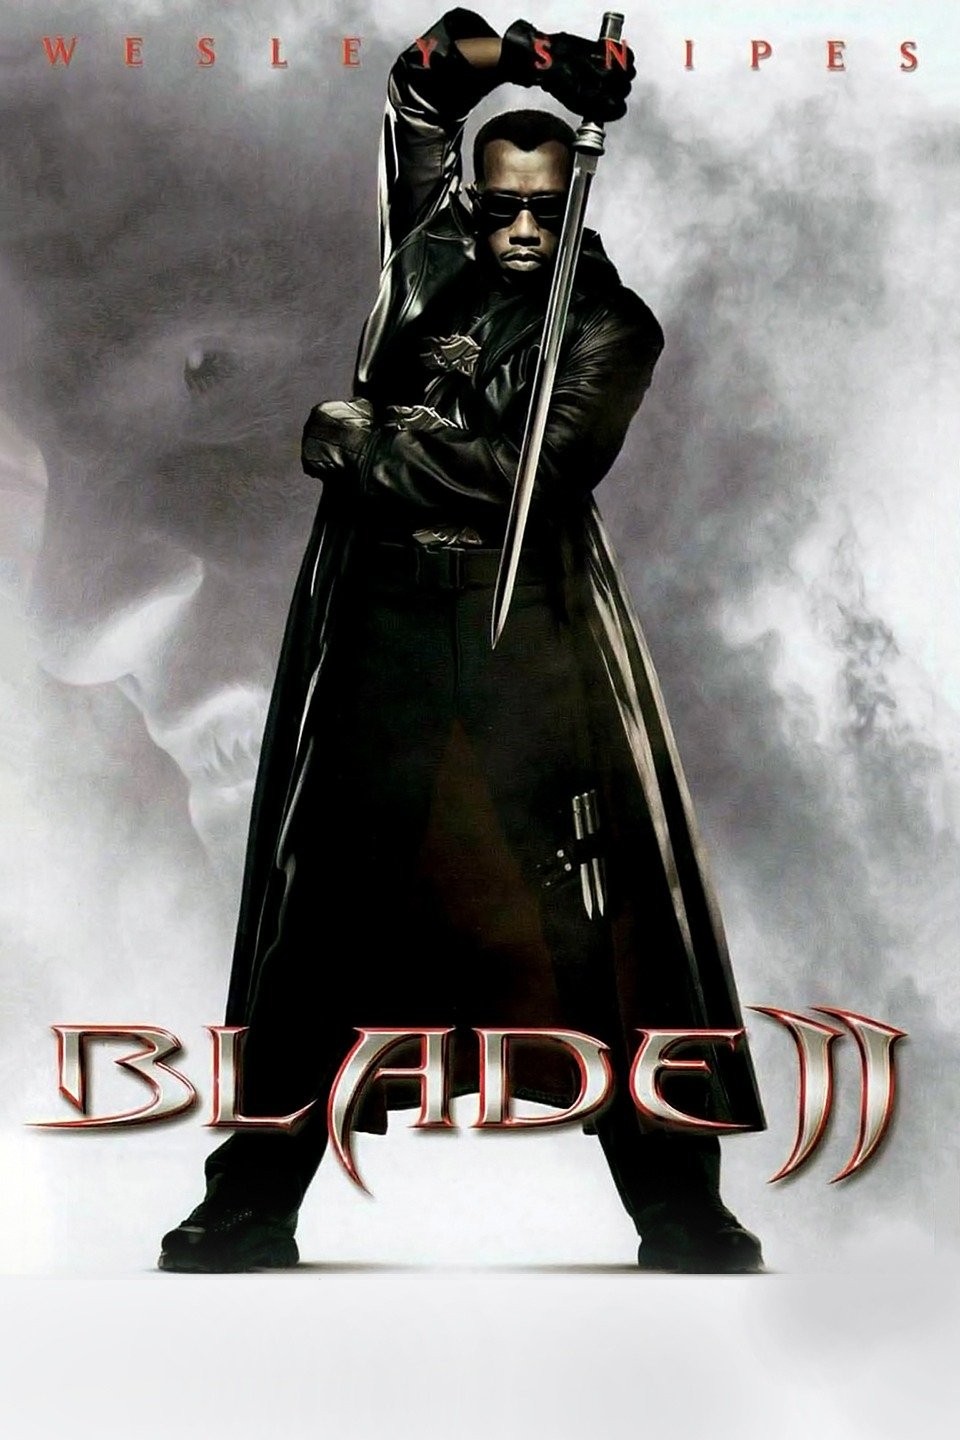 Blade II (2002) - Wesley Snipes as Blade - IMDb